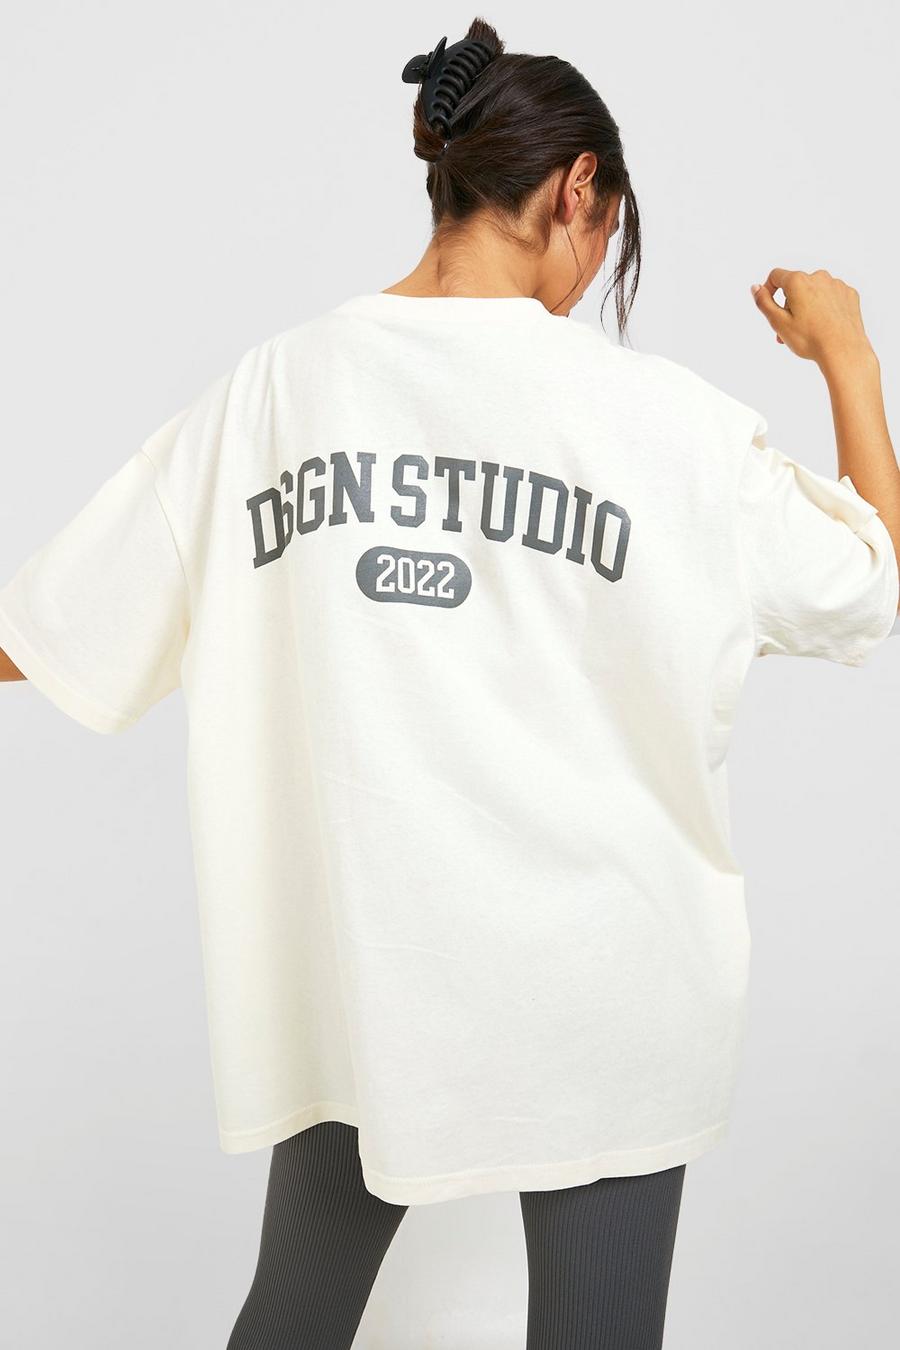 T-shirt oversize à slogan Dsgn Studio au dos, Ecru blanc